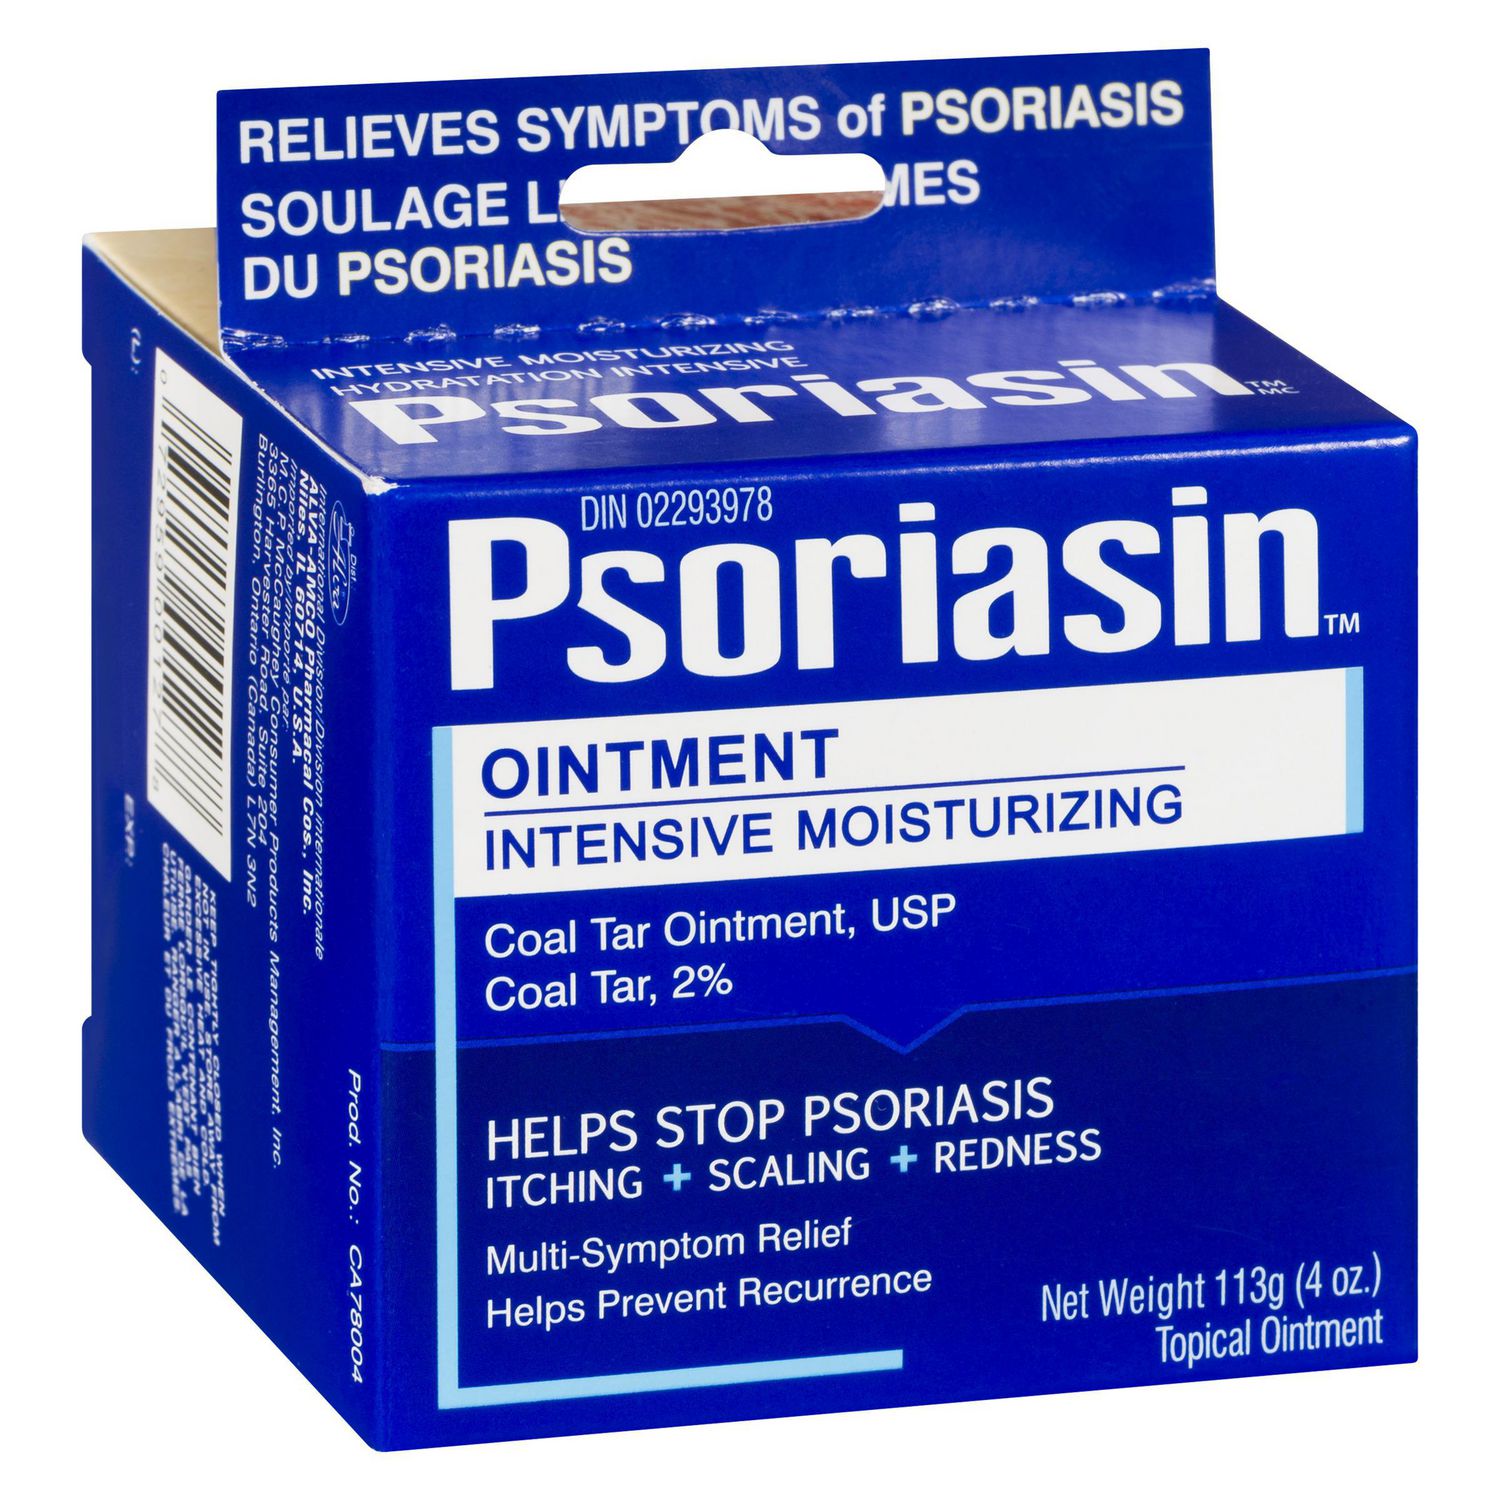 psoriasin ointment walmart canada)